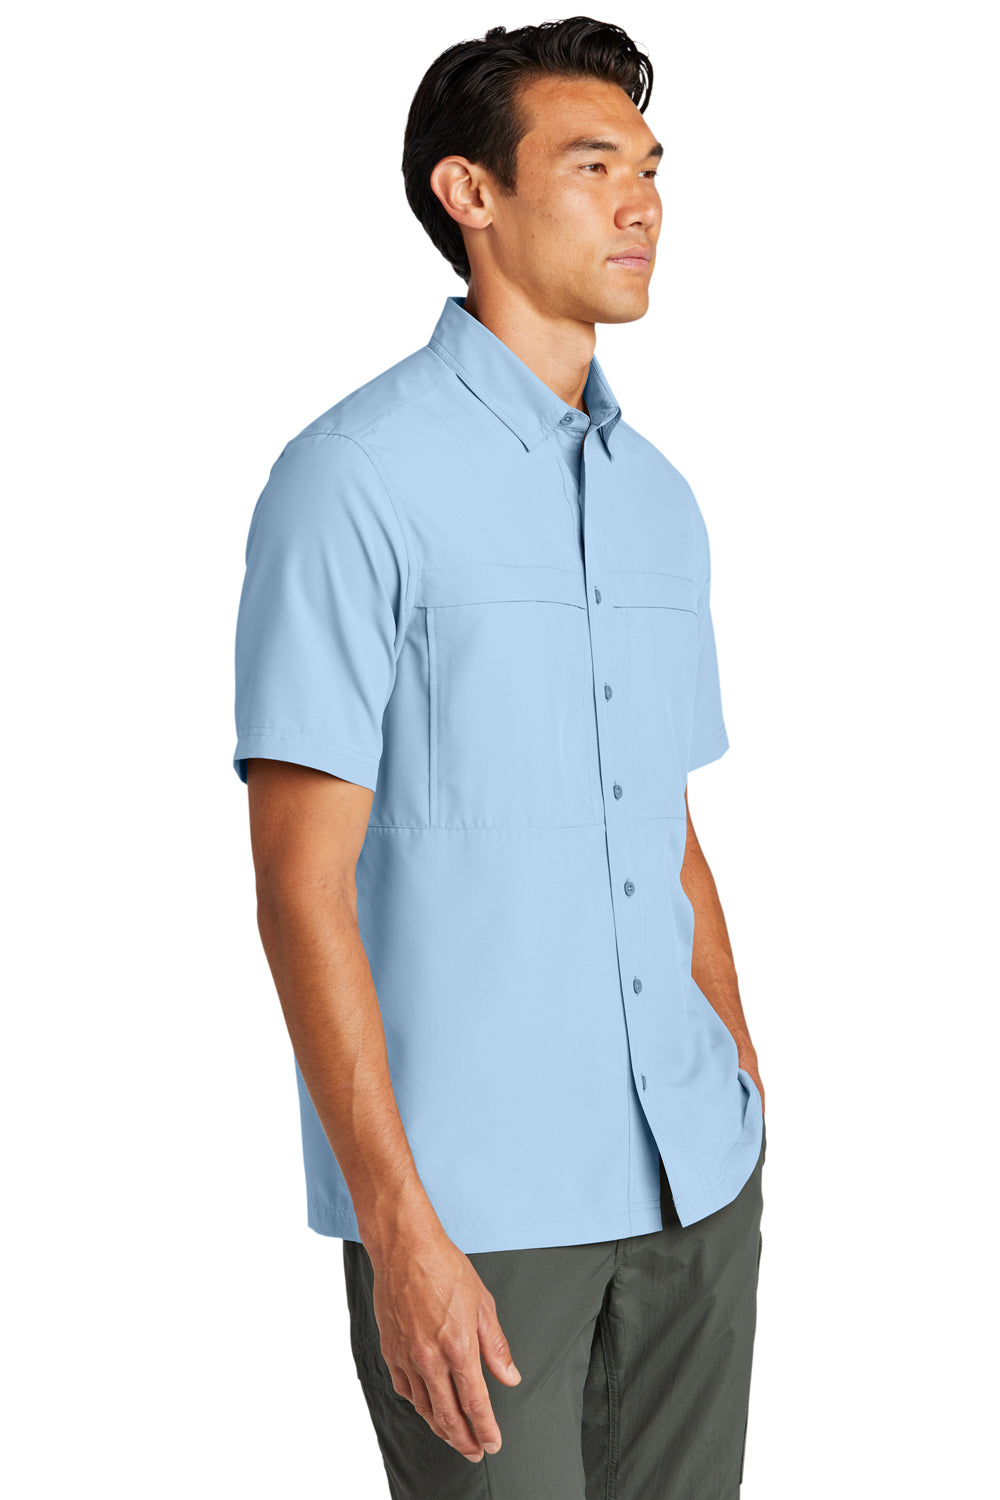 Port Authority W961 UV Daybreak Short Sleeve Button Down Shirt Light Blue 3Q